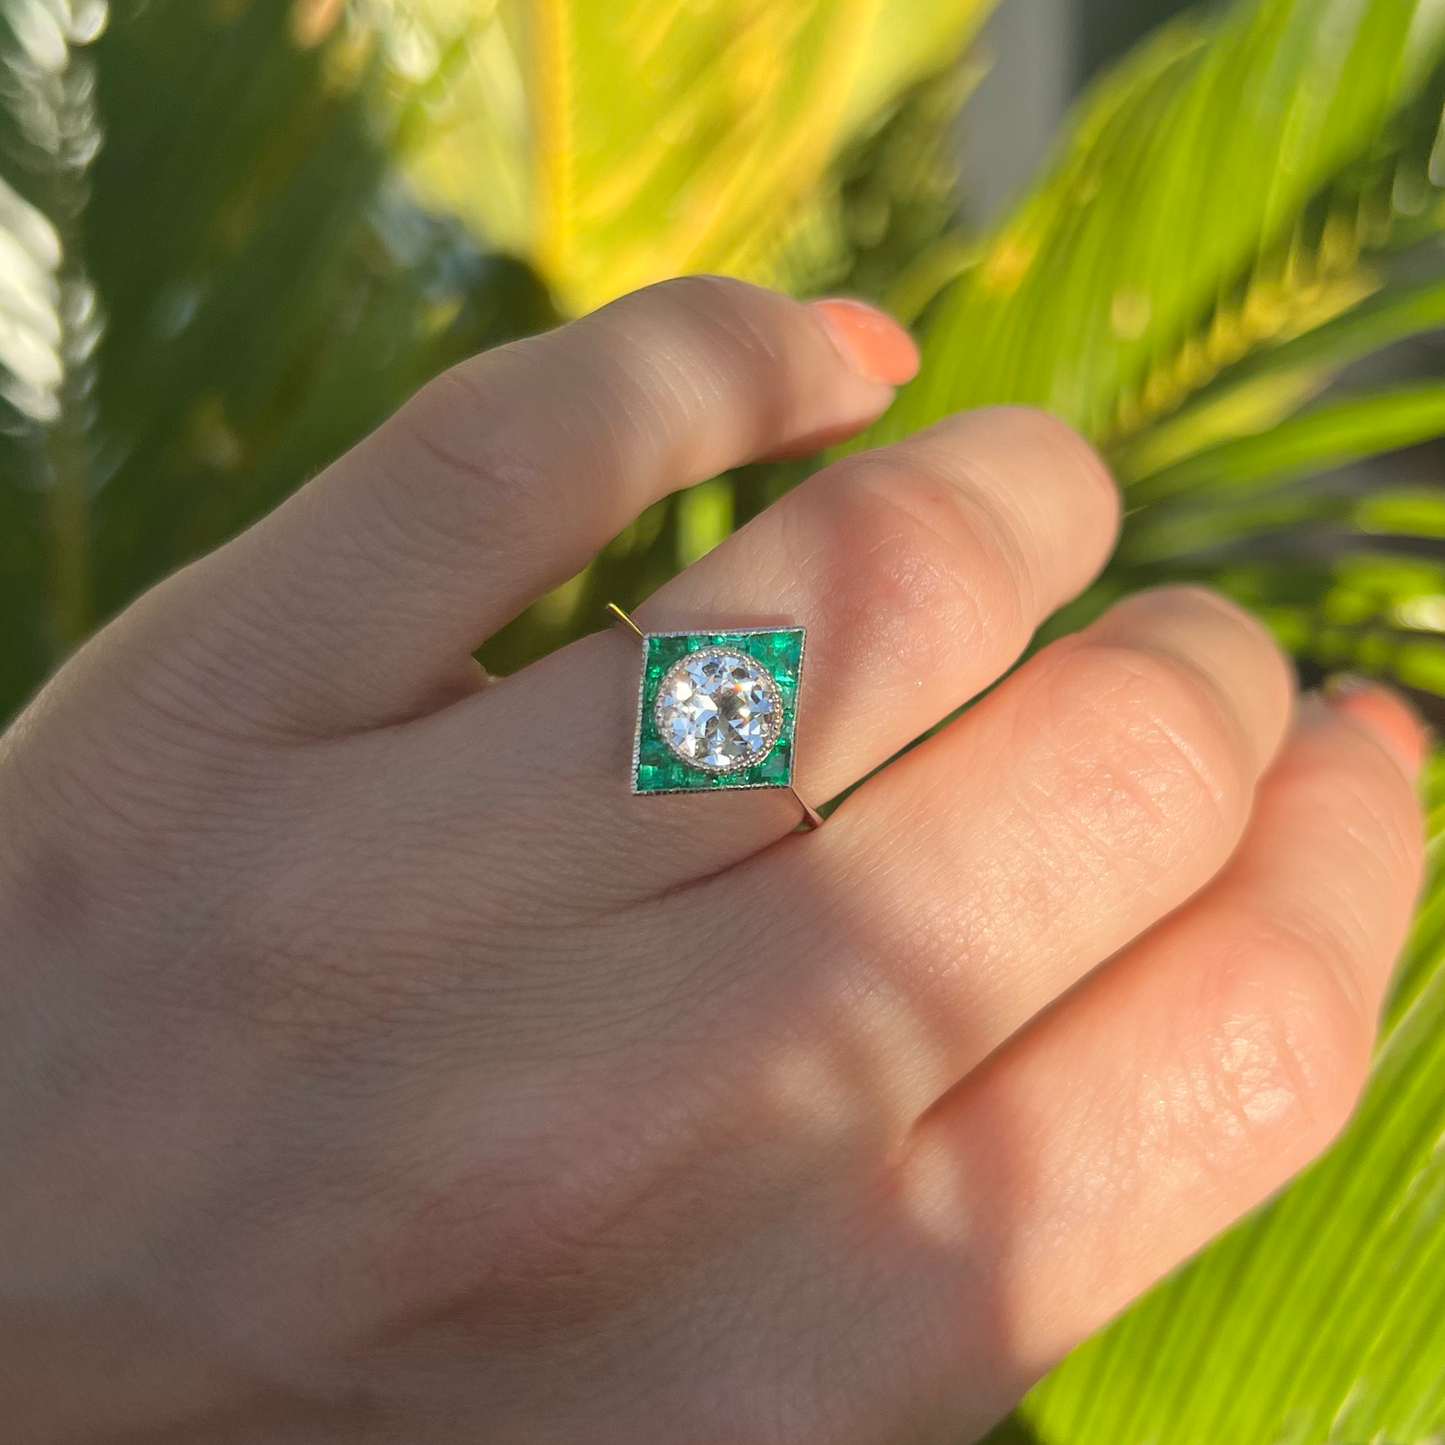 Art Deco Calibre Cut Emerald & Old European Cut Diamond Ring